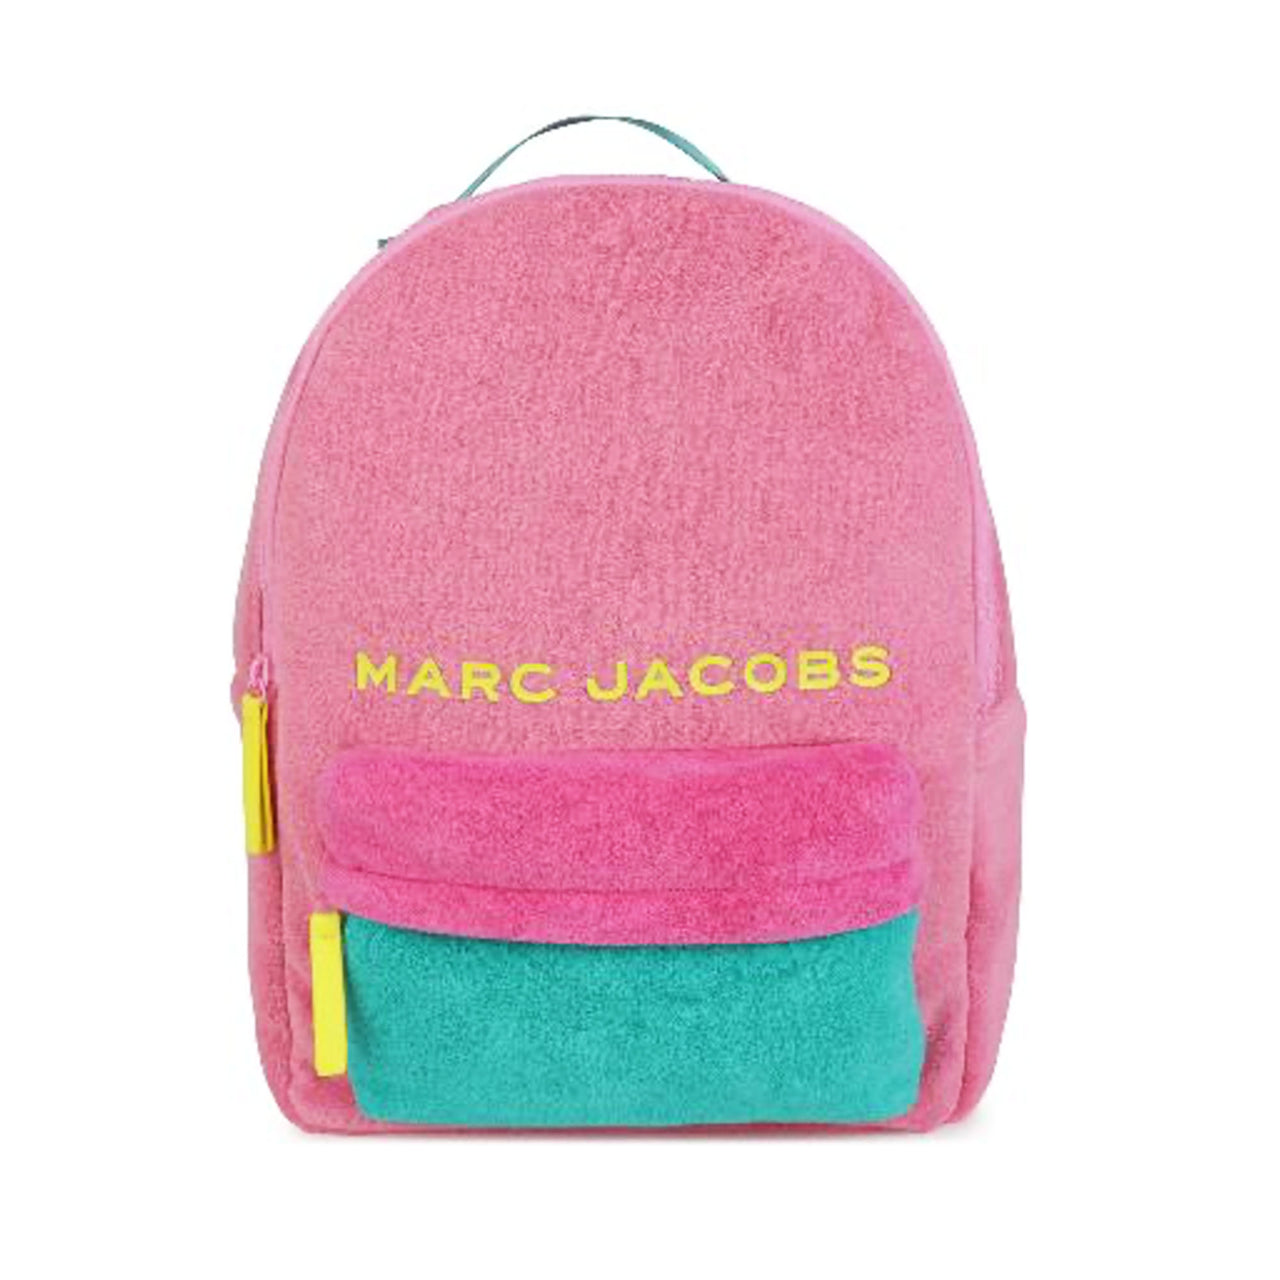 Backpack o mochila Marc Jacobs